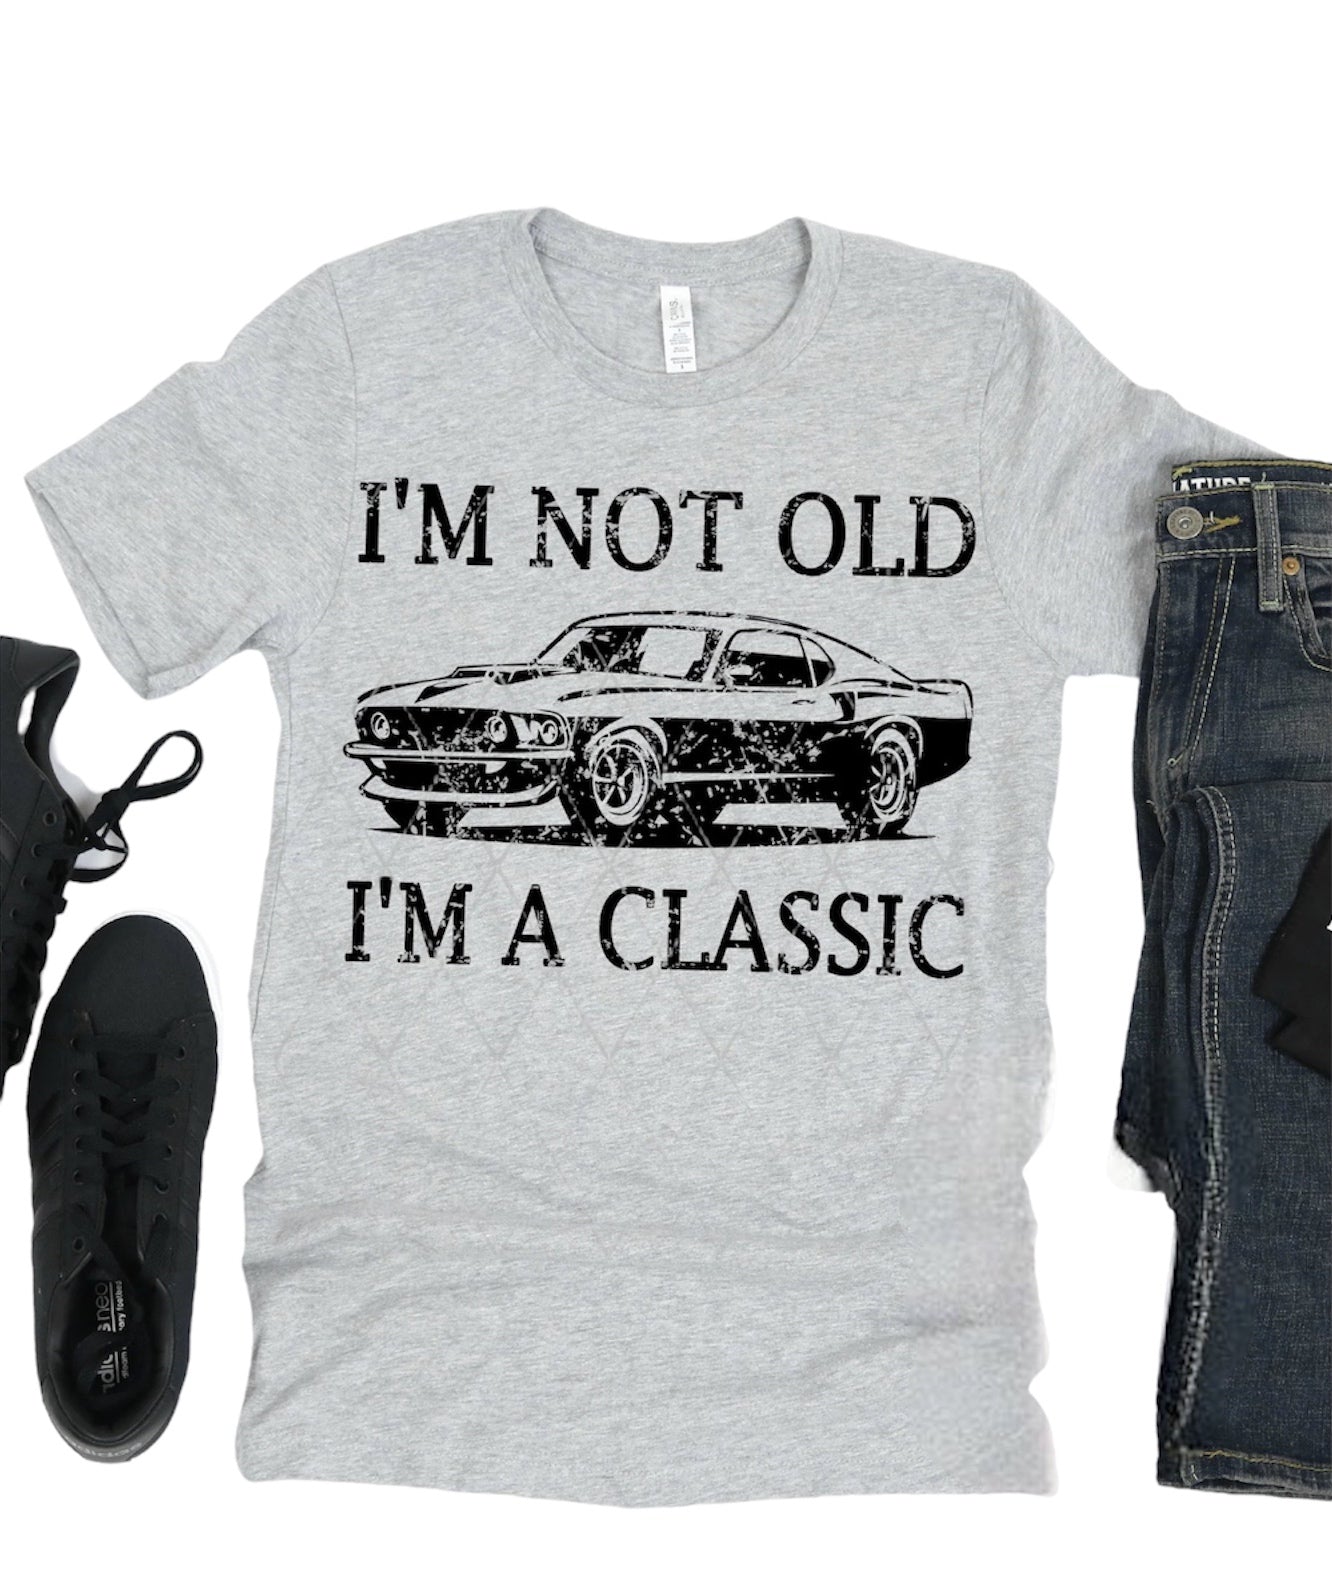 I'm a classic Car tee